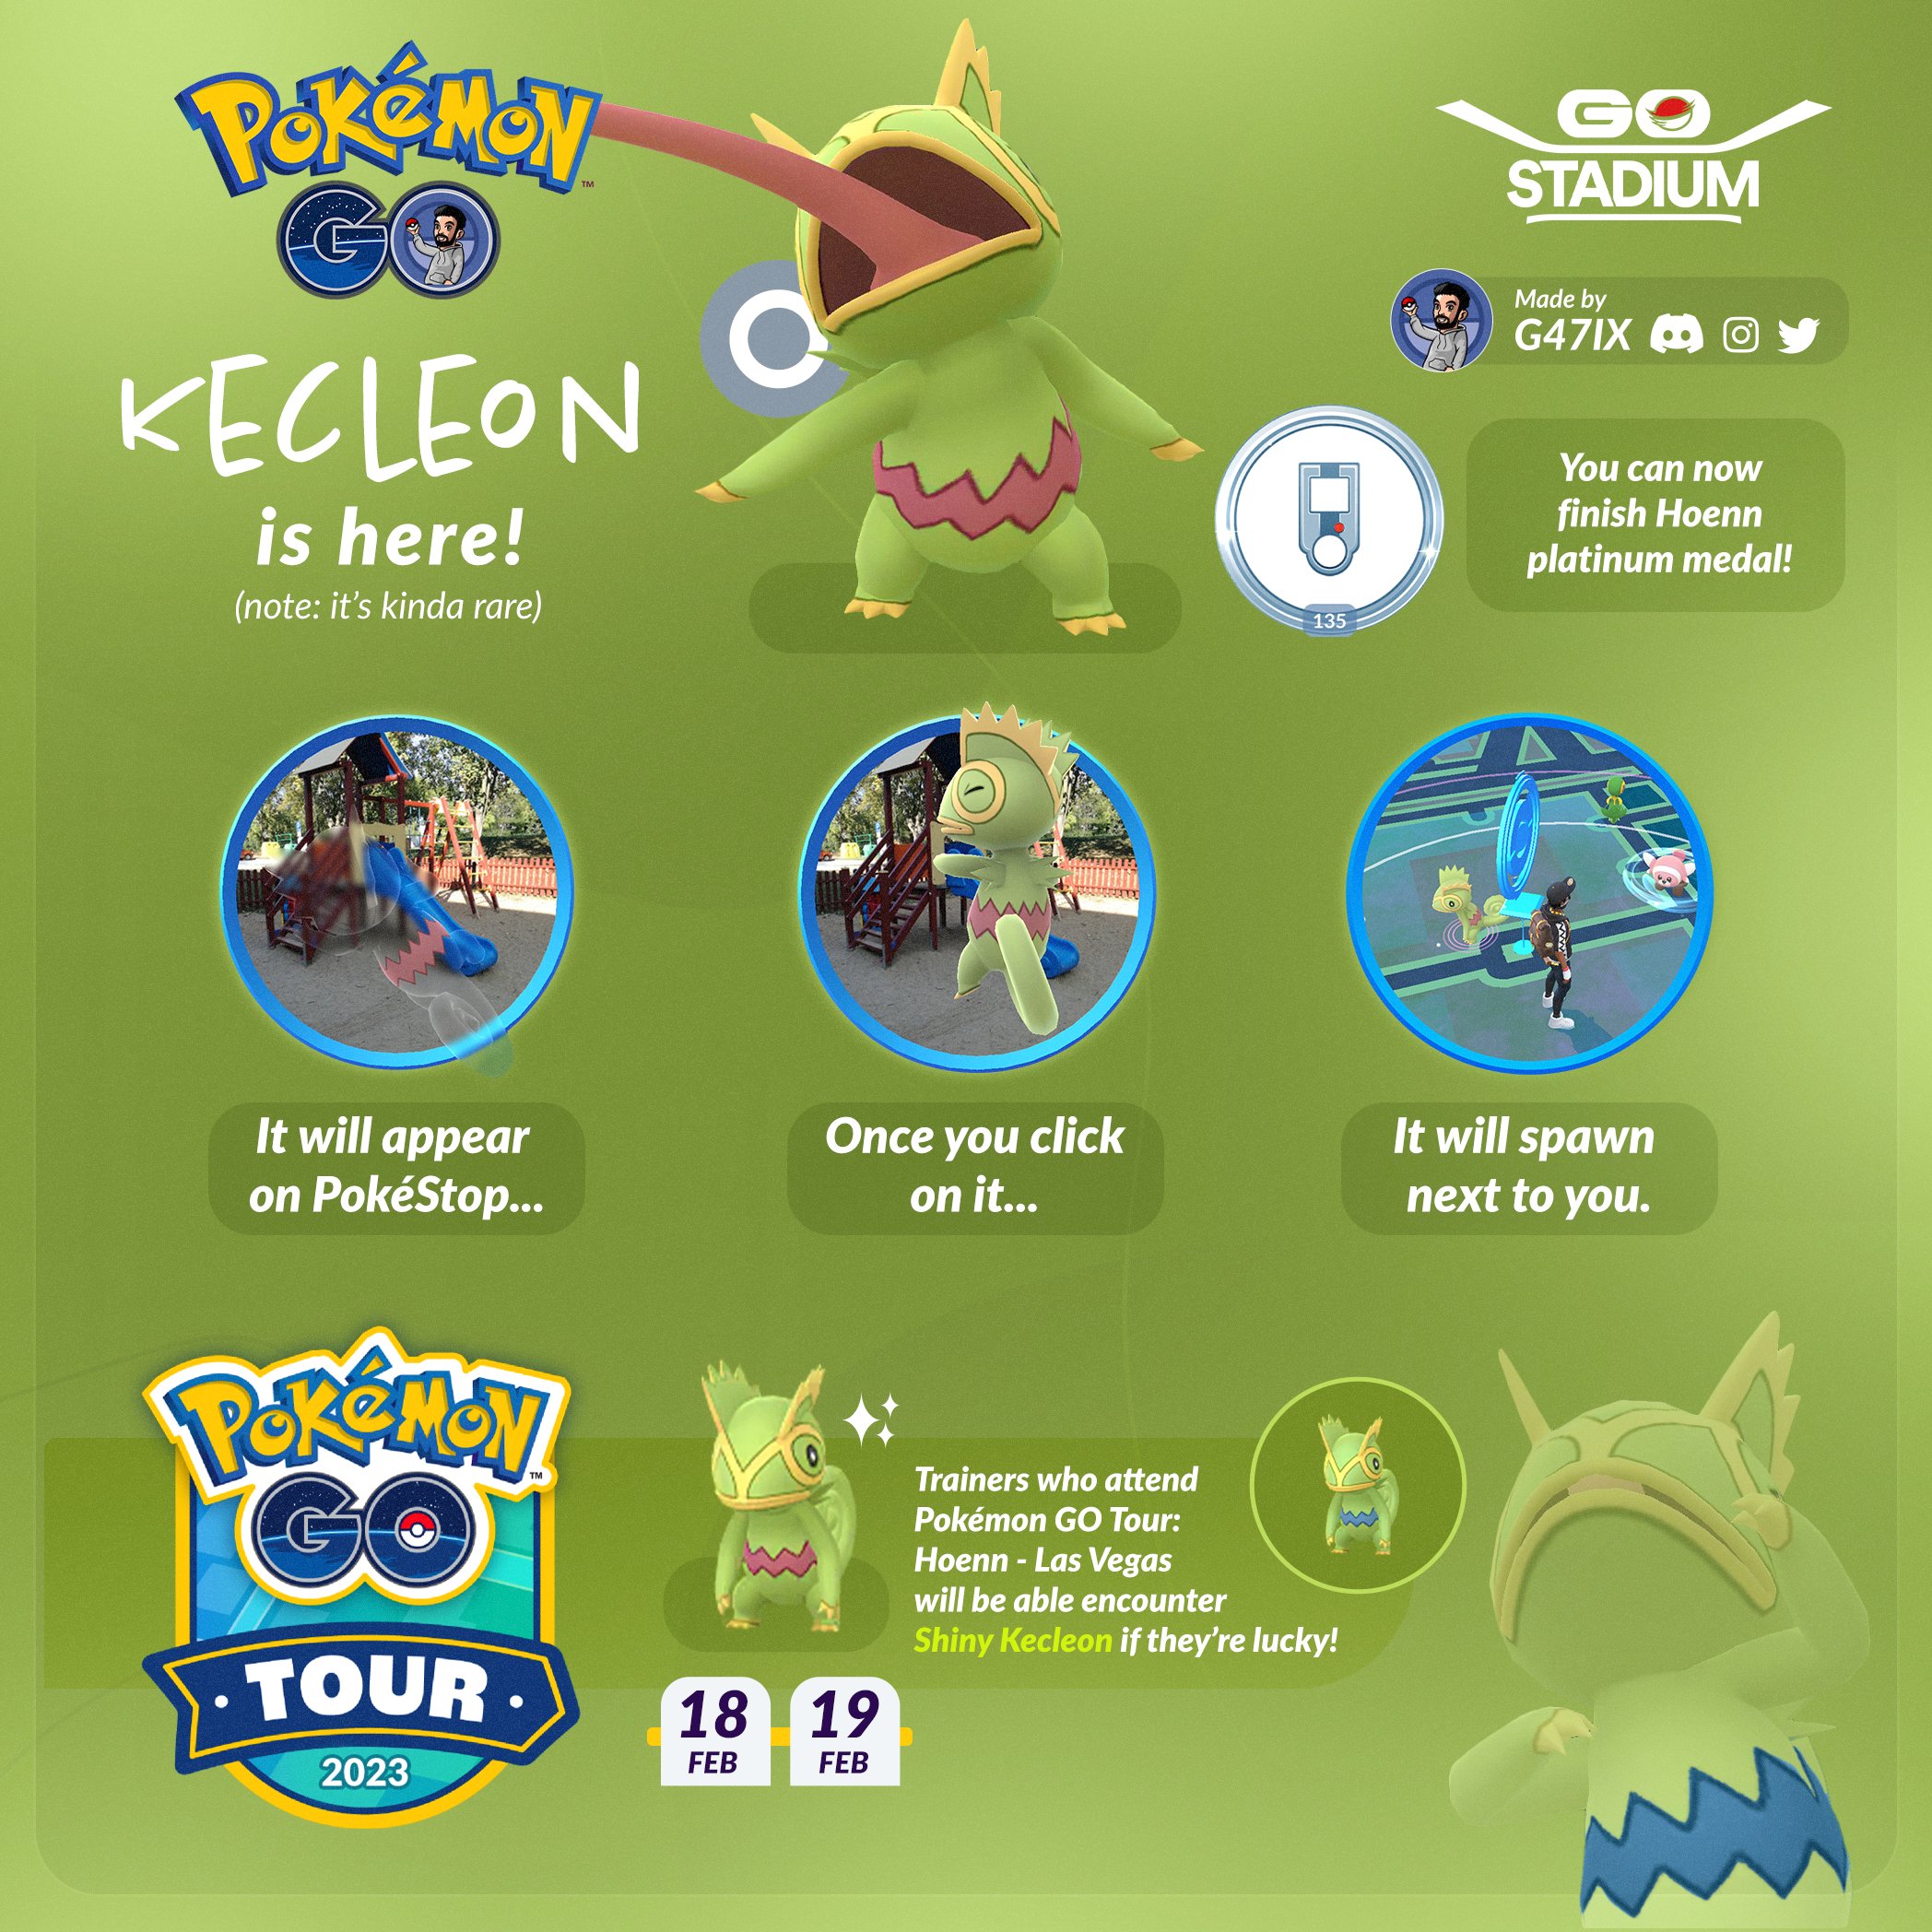 Pokemon Go leak shows possible Kecleon encounter coming soon - Dexerto